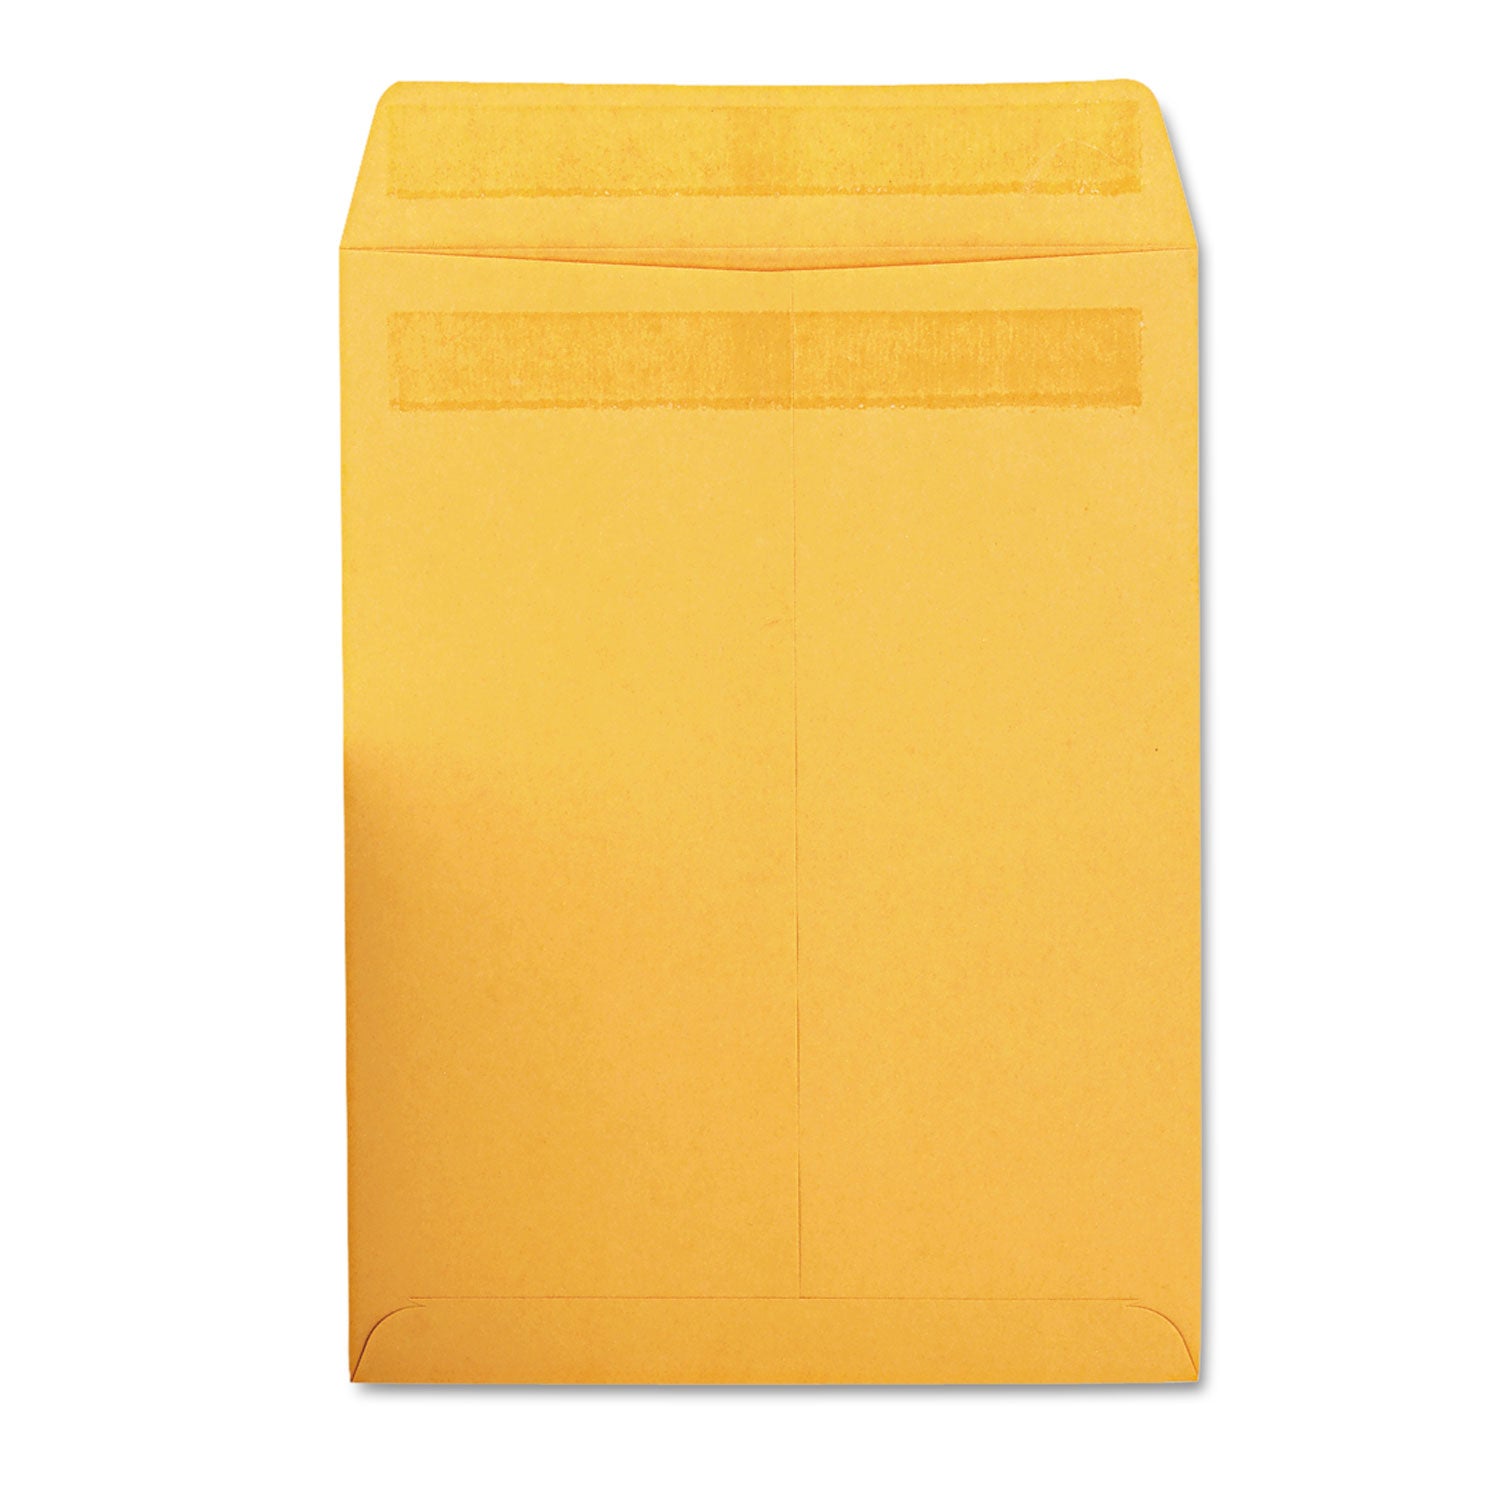 Redi-Seal Catalog Envelope, #10 1/2, Cheese Blade Flap, Redi-Seal Adhesive Closure, 9 x 12, Brown Kraft, 100/Box - 